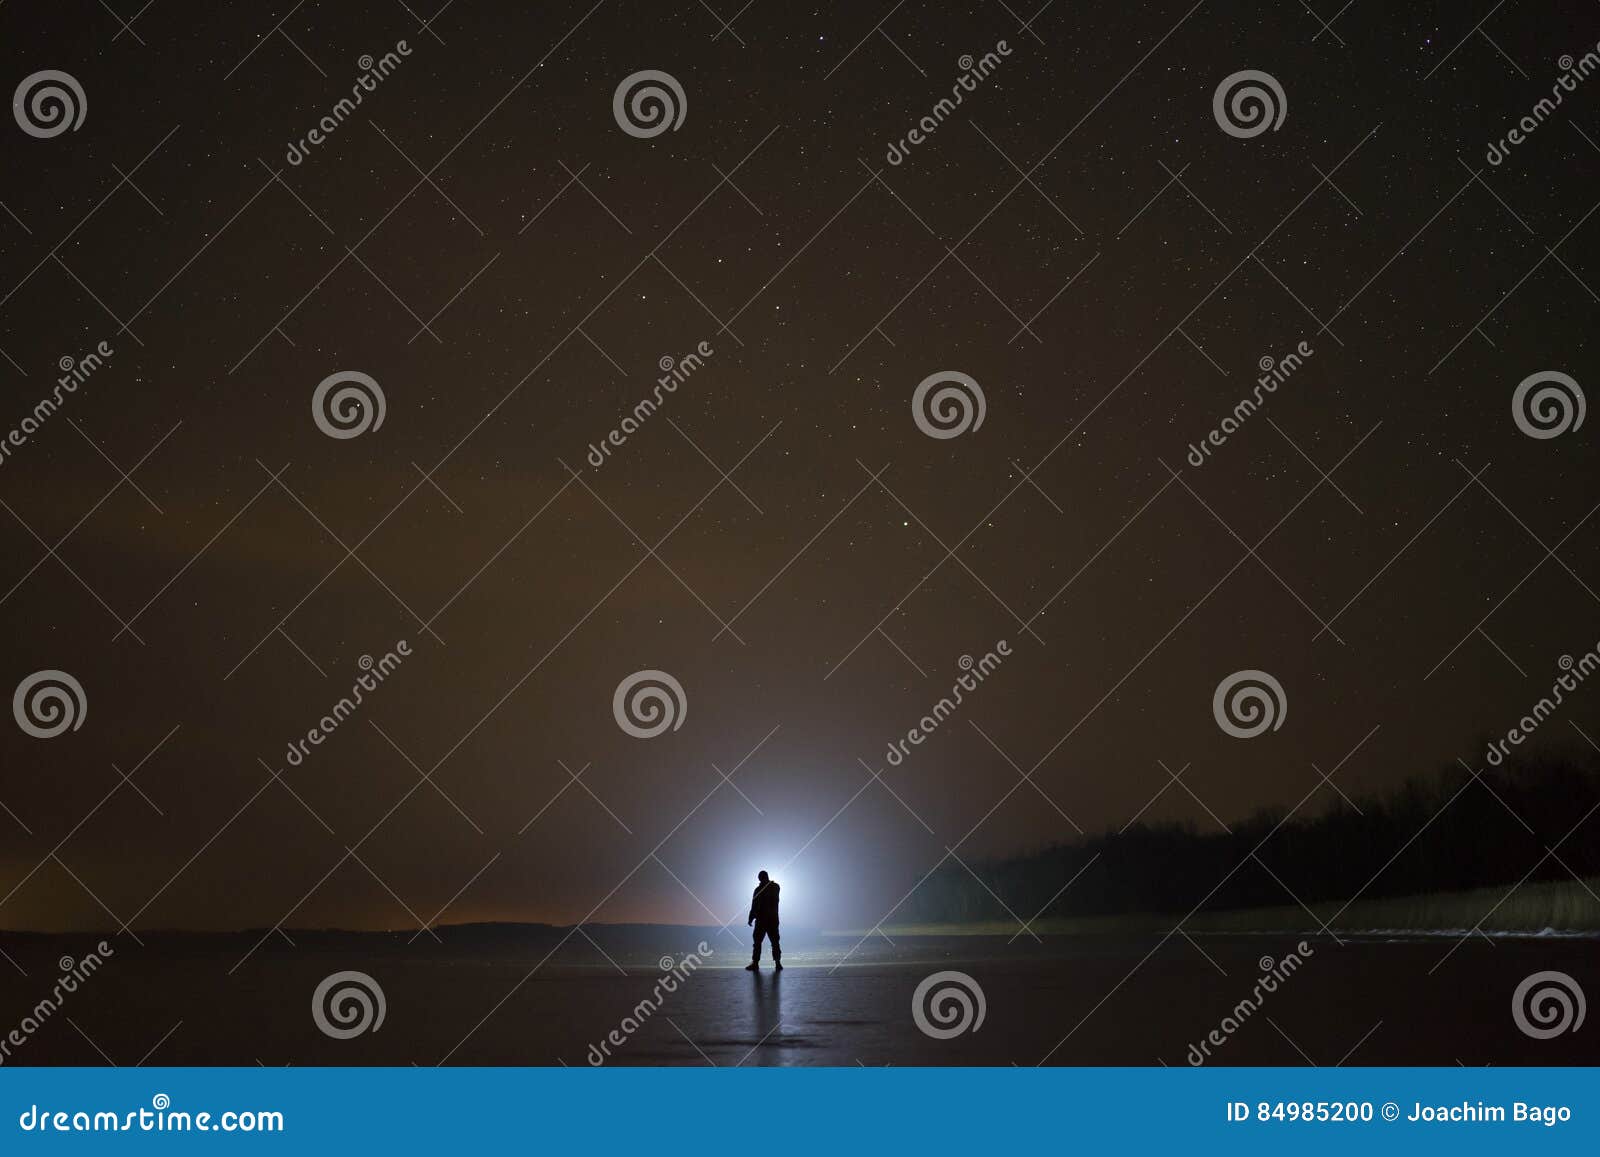 human with flashlight